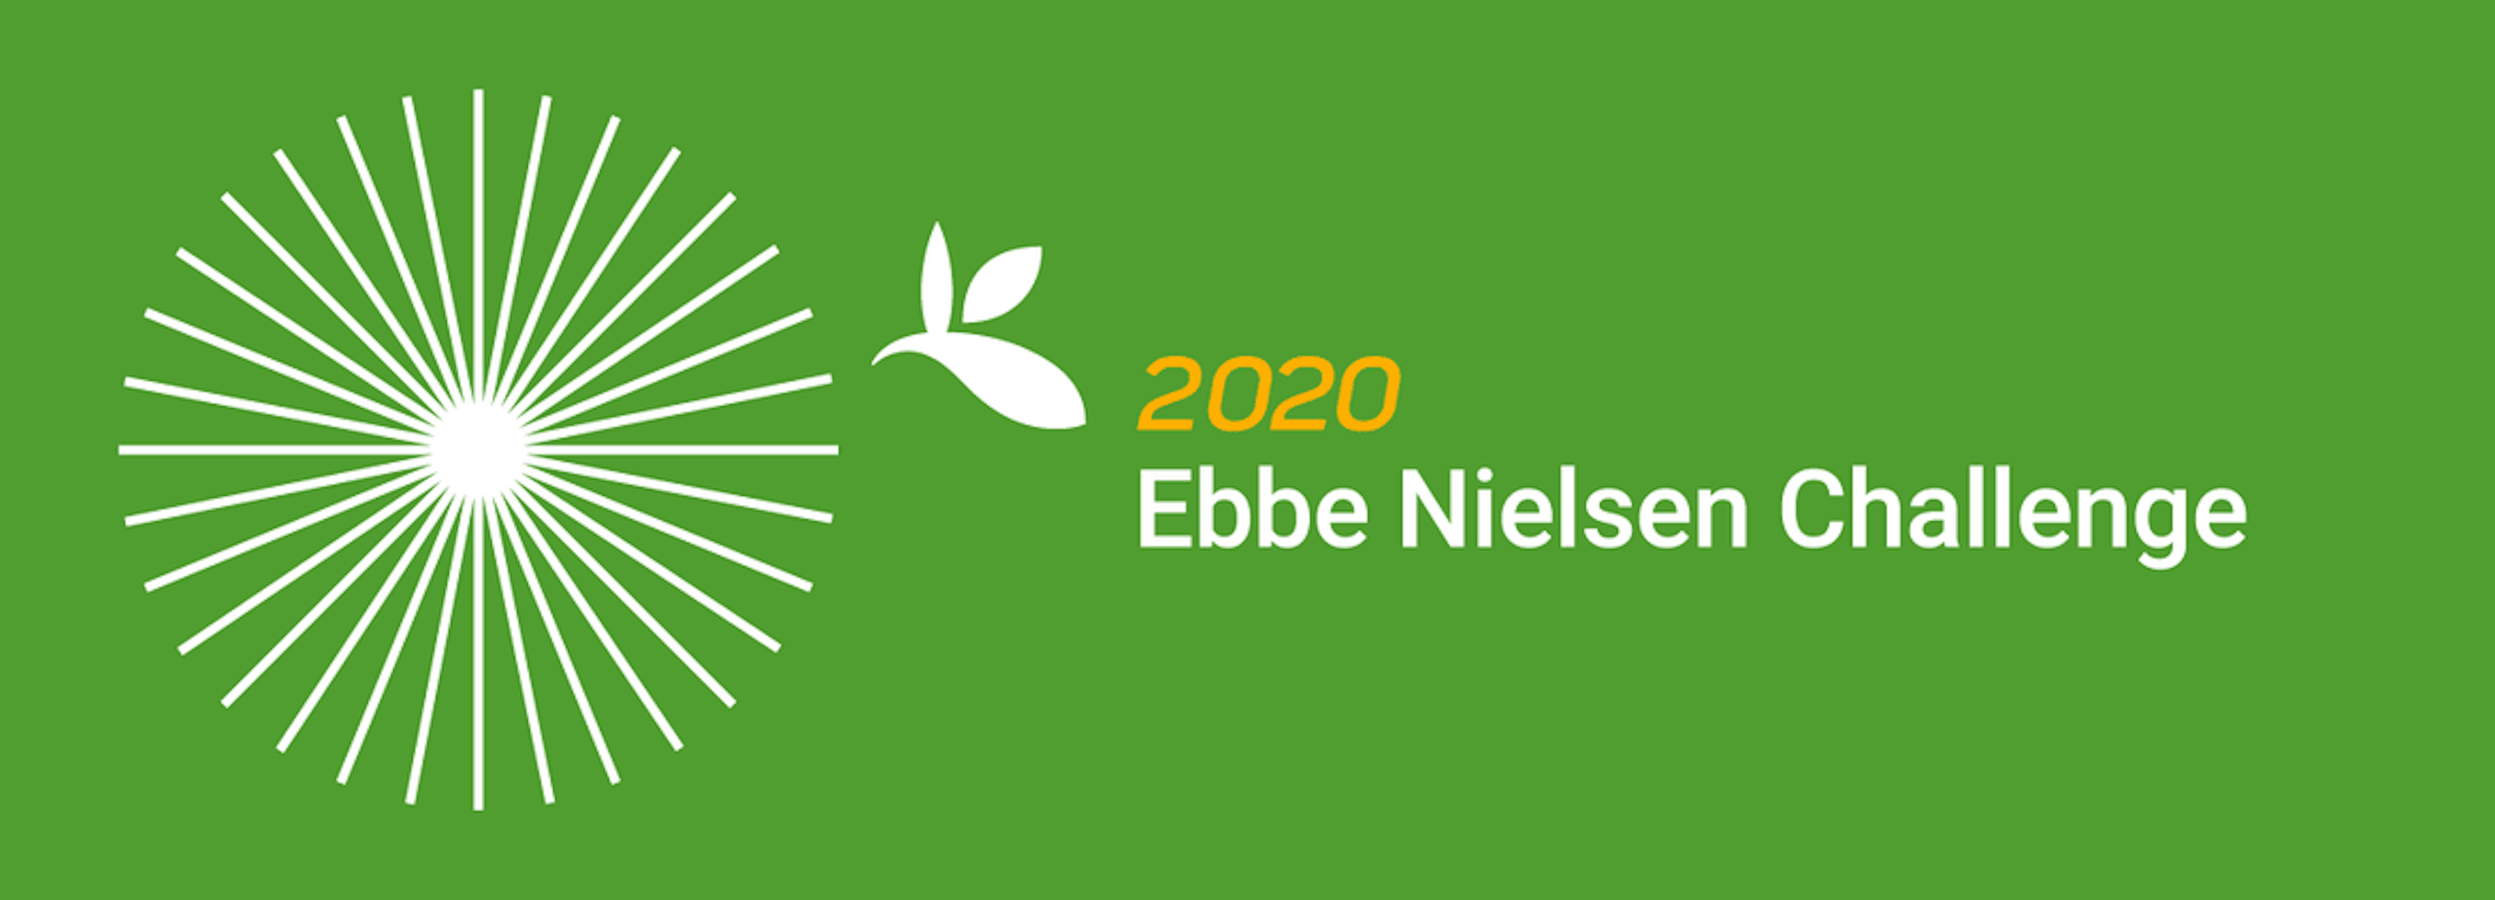 GBIF Ebbe Nielsen 2020 Challenge graphic